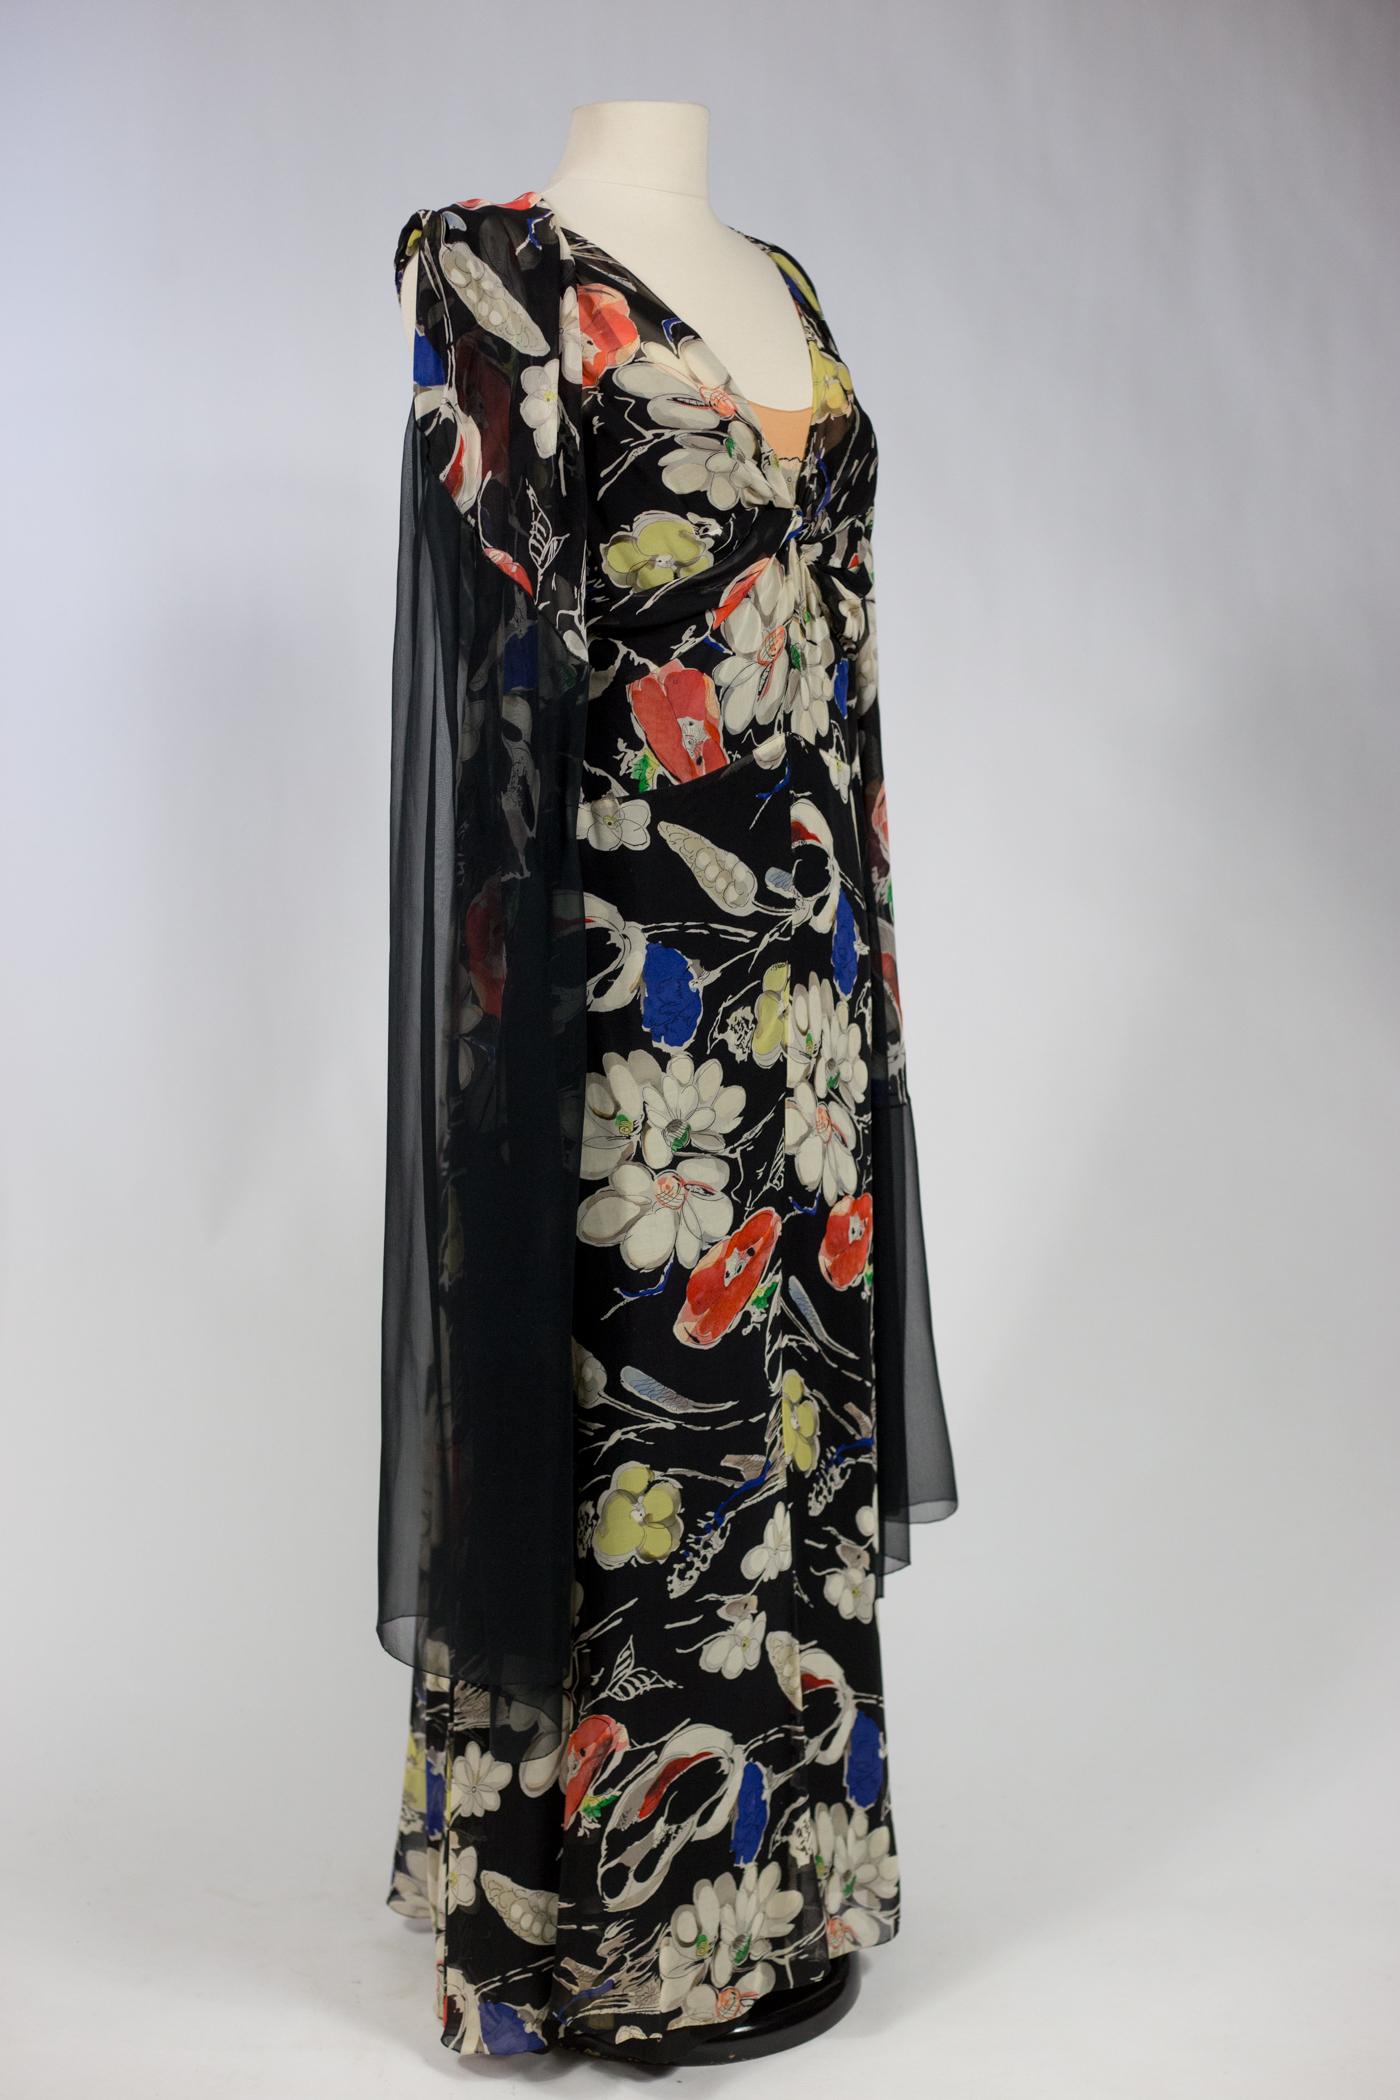 A French Printed Silk Chiffon Dress in the taste of Molyneux Circa 1935/1940 3